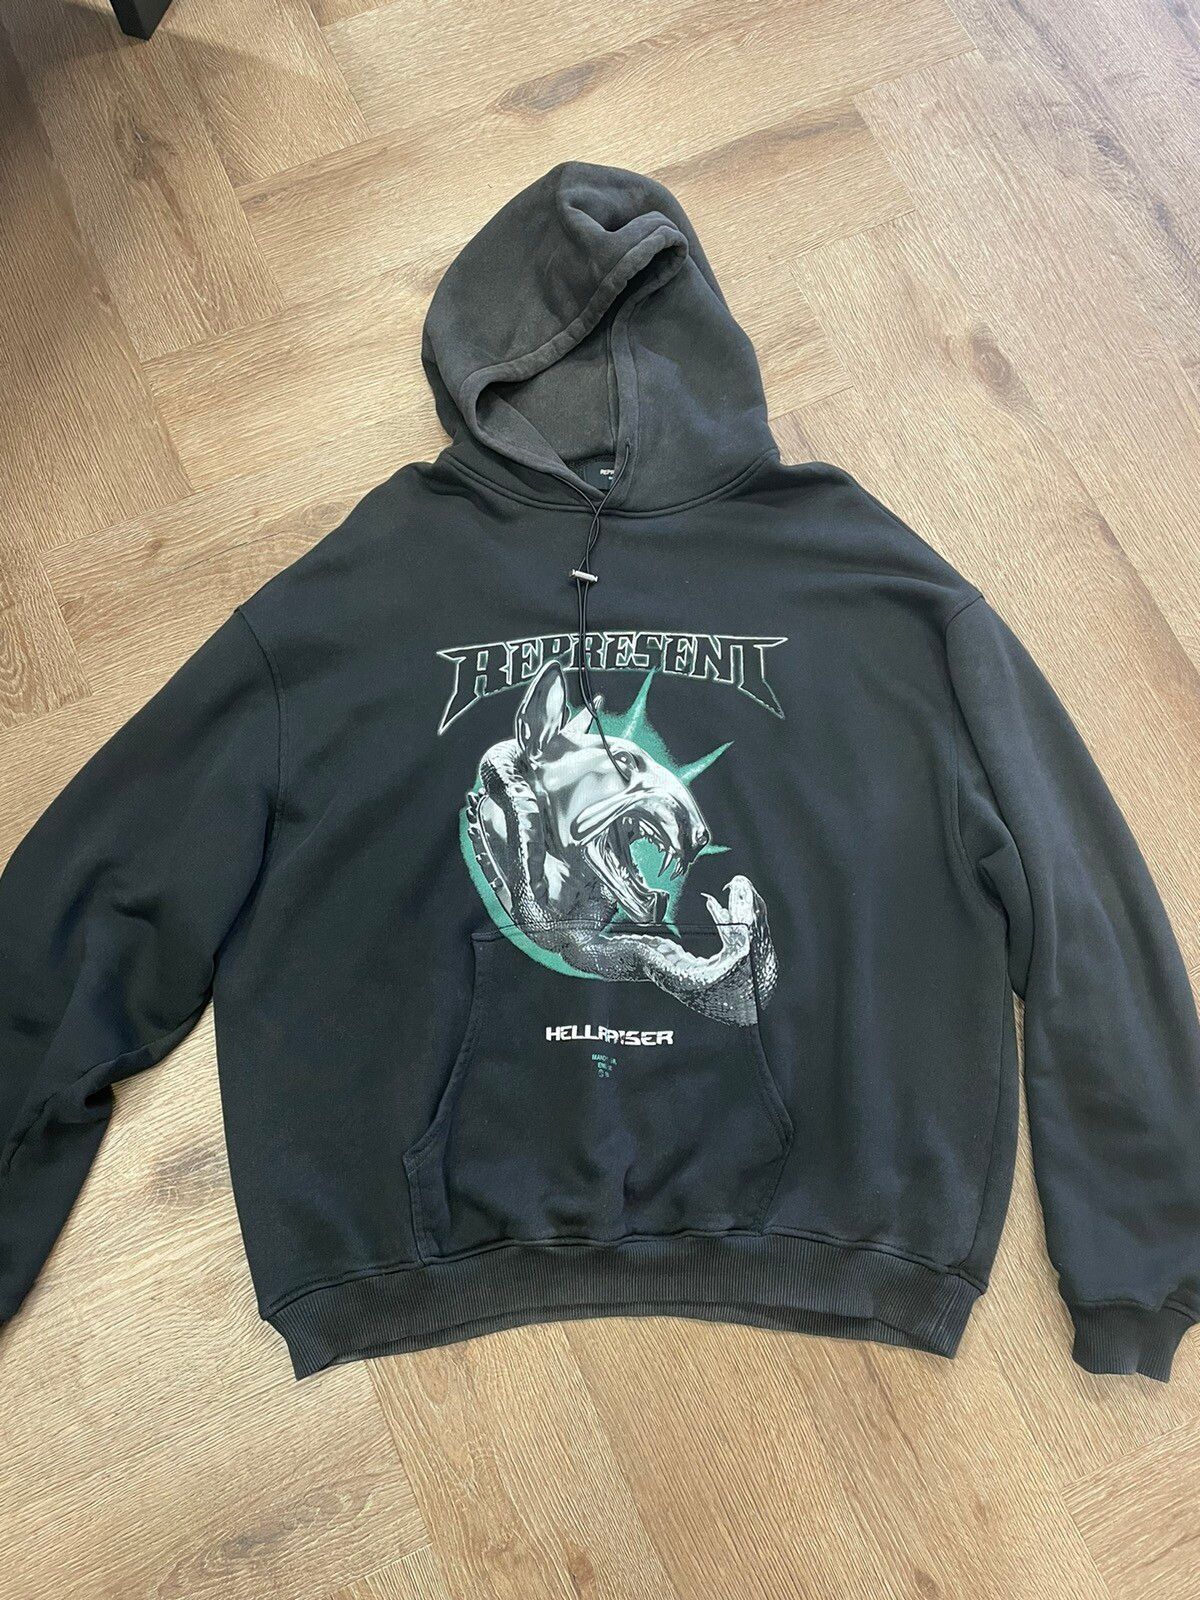 Represent Clo. Hellraiser hoodie XL represent | Grailed